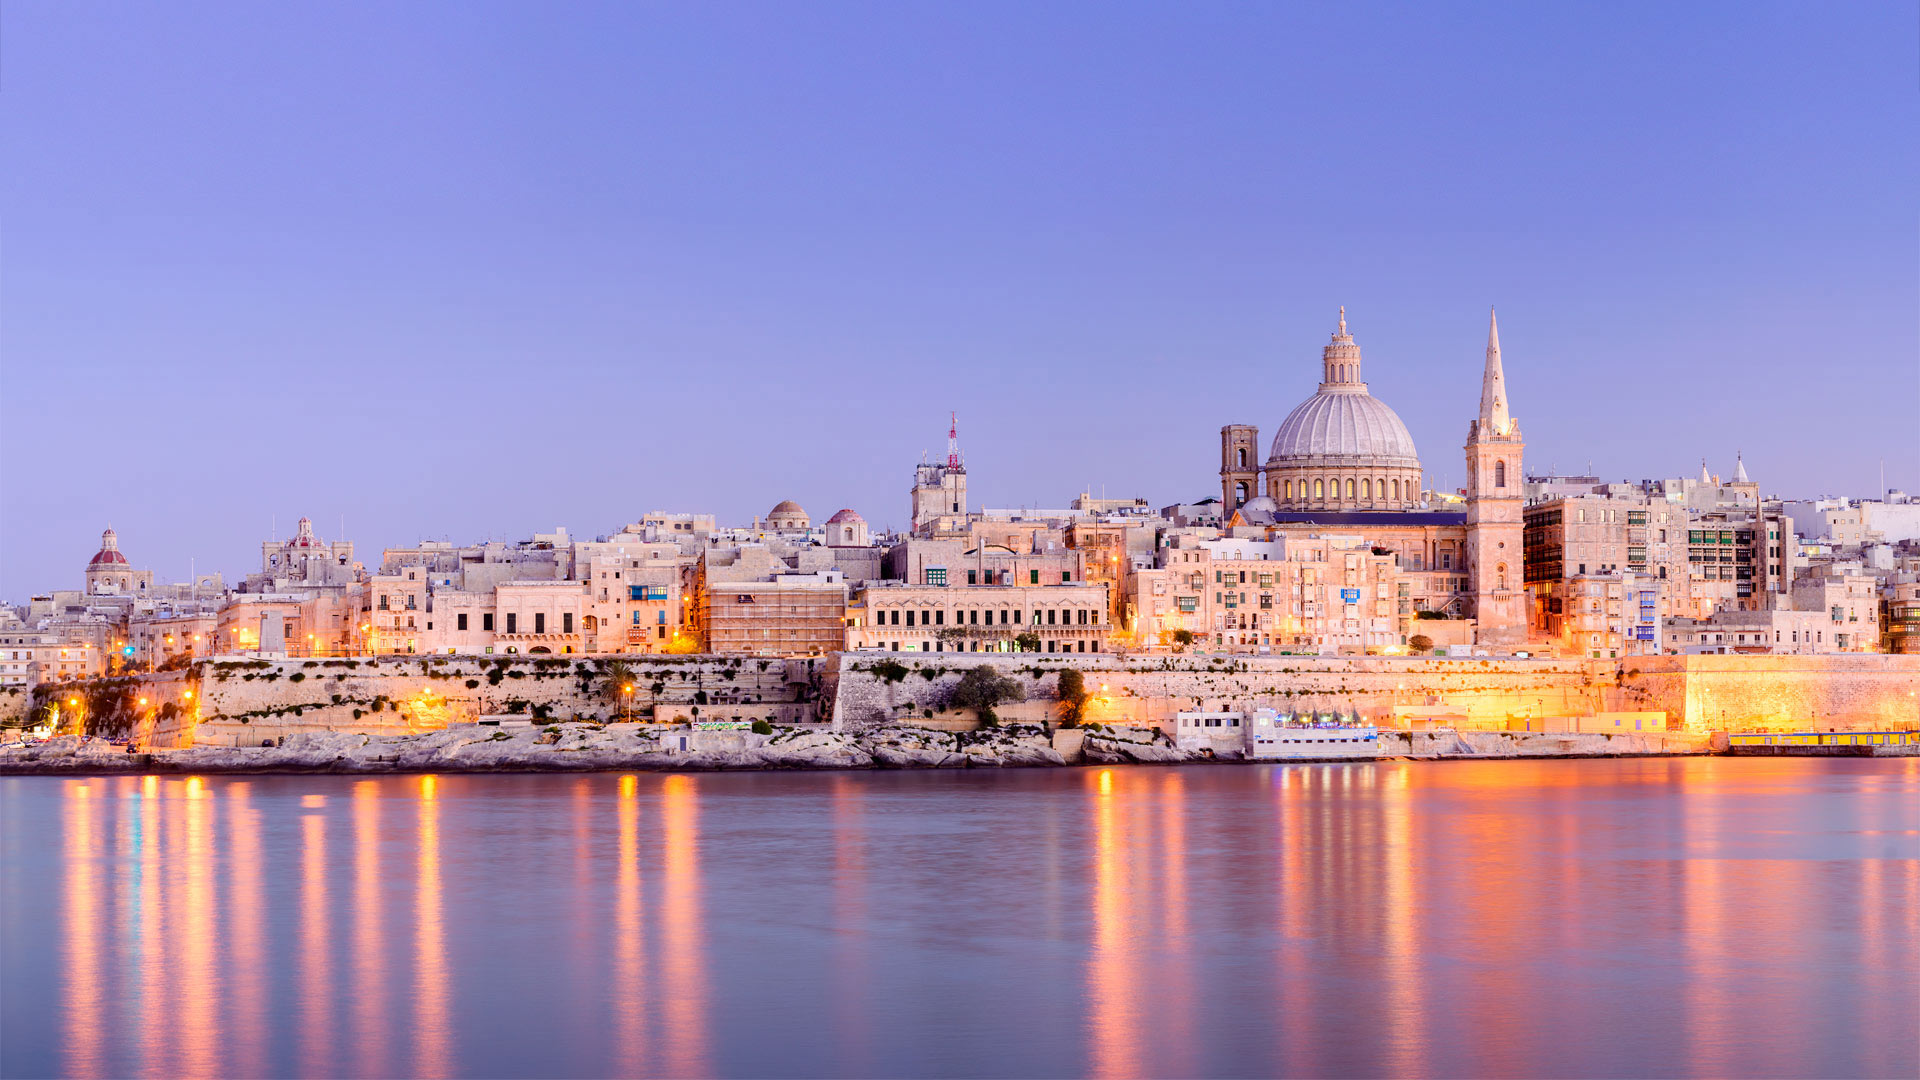 Valletta, Malta - Deejpilot/Getty Images)